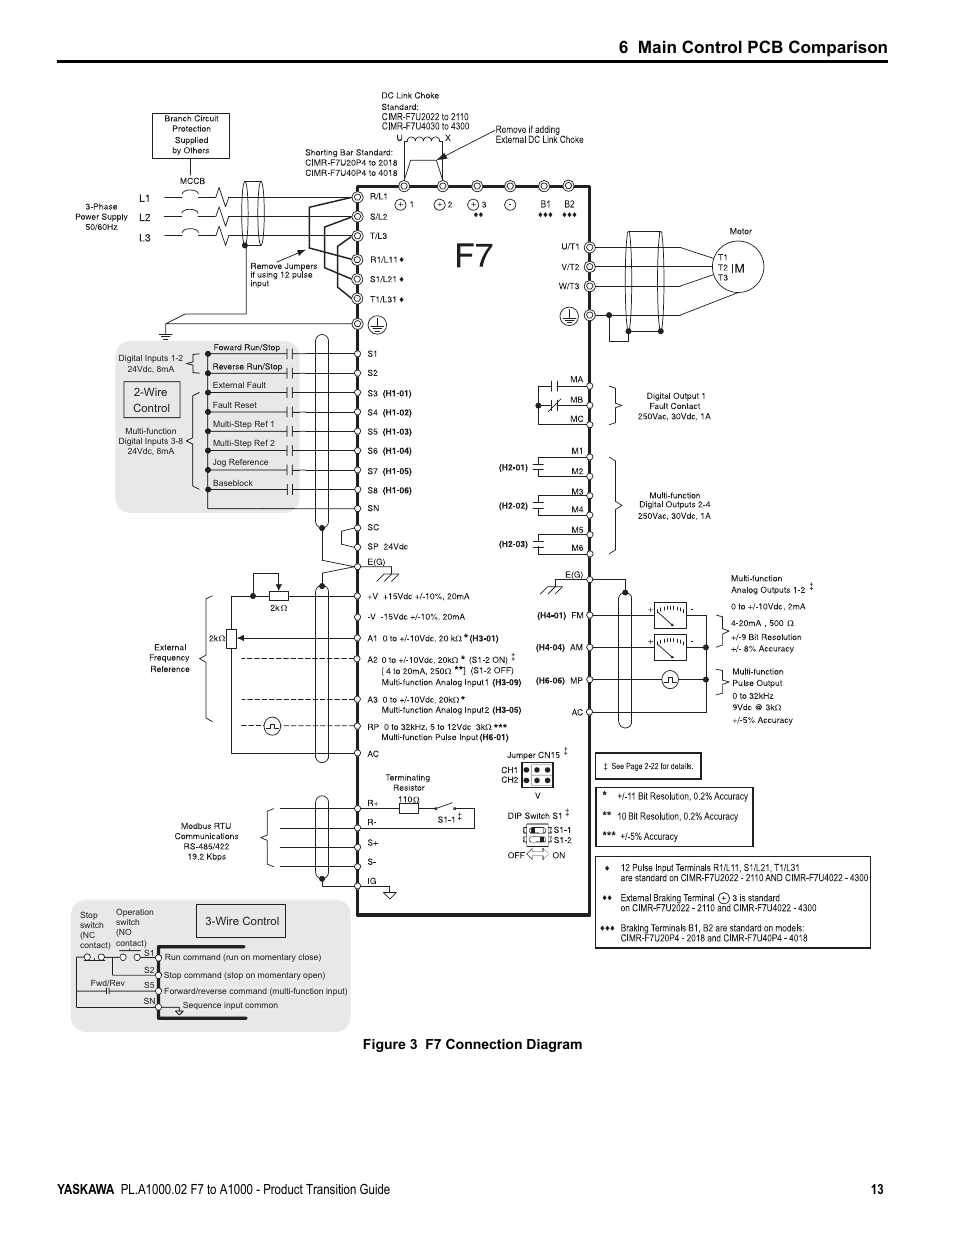 6 main control pcb comparison, Figure 3 f7 connection diagram | Yaskawa F7 to A1000 User Manual | Page 13 / 68